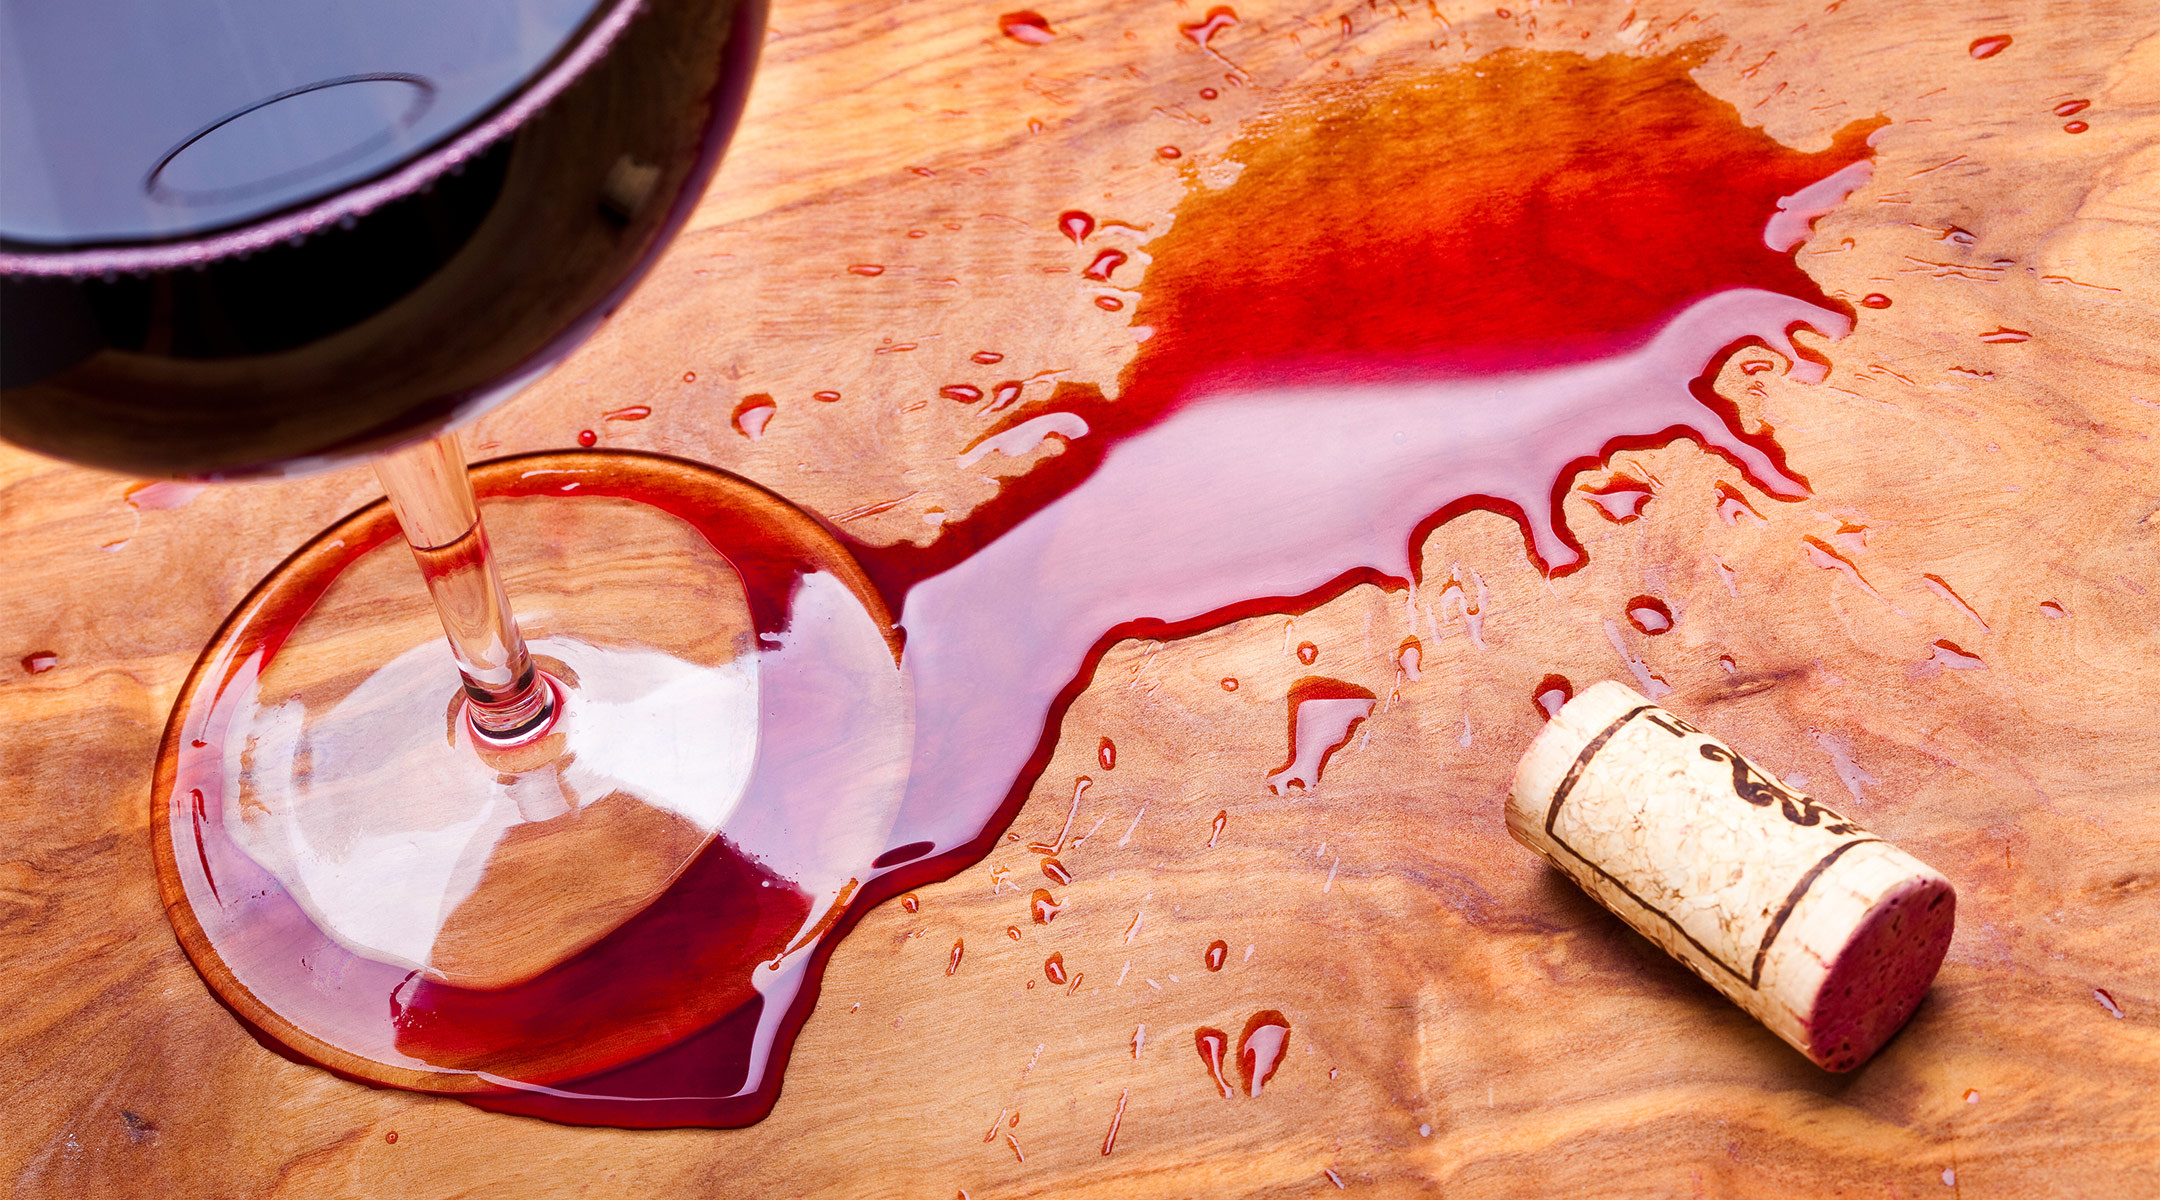 red wine glass spills over onto floor